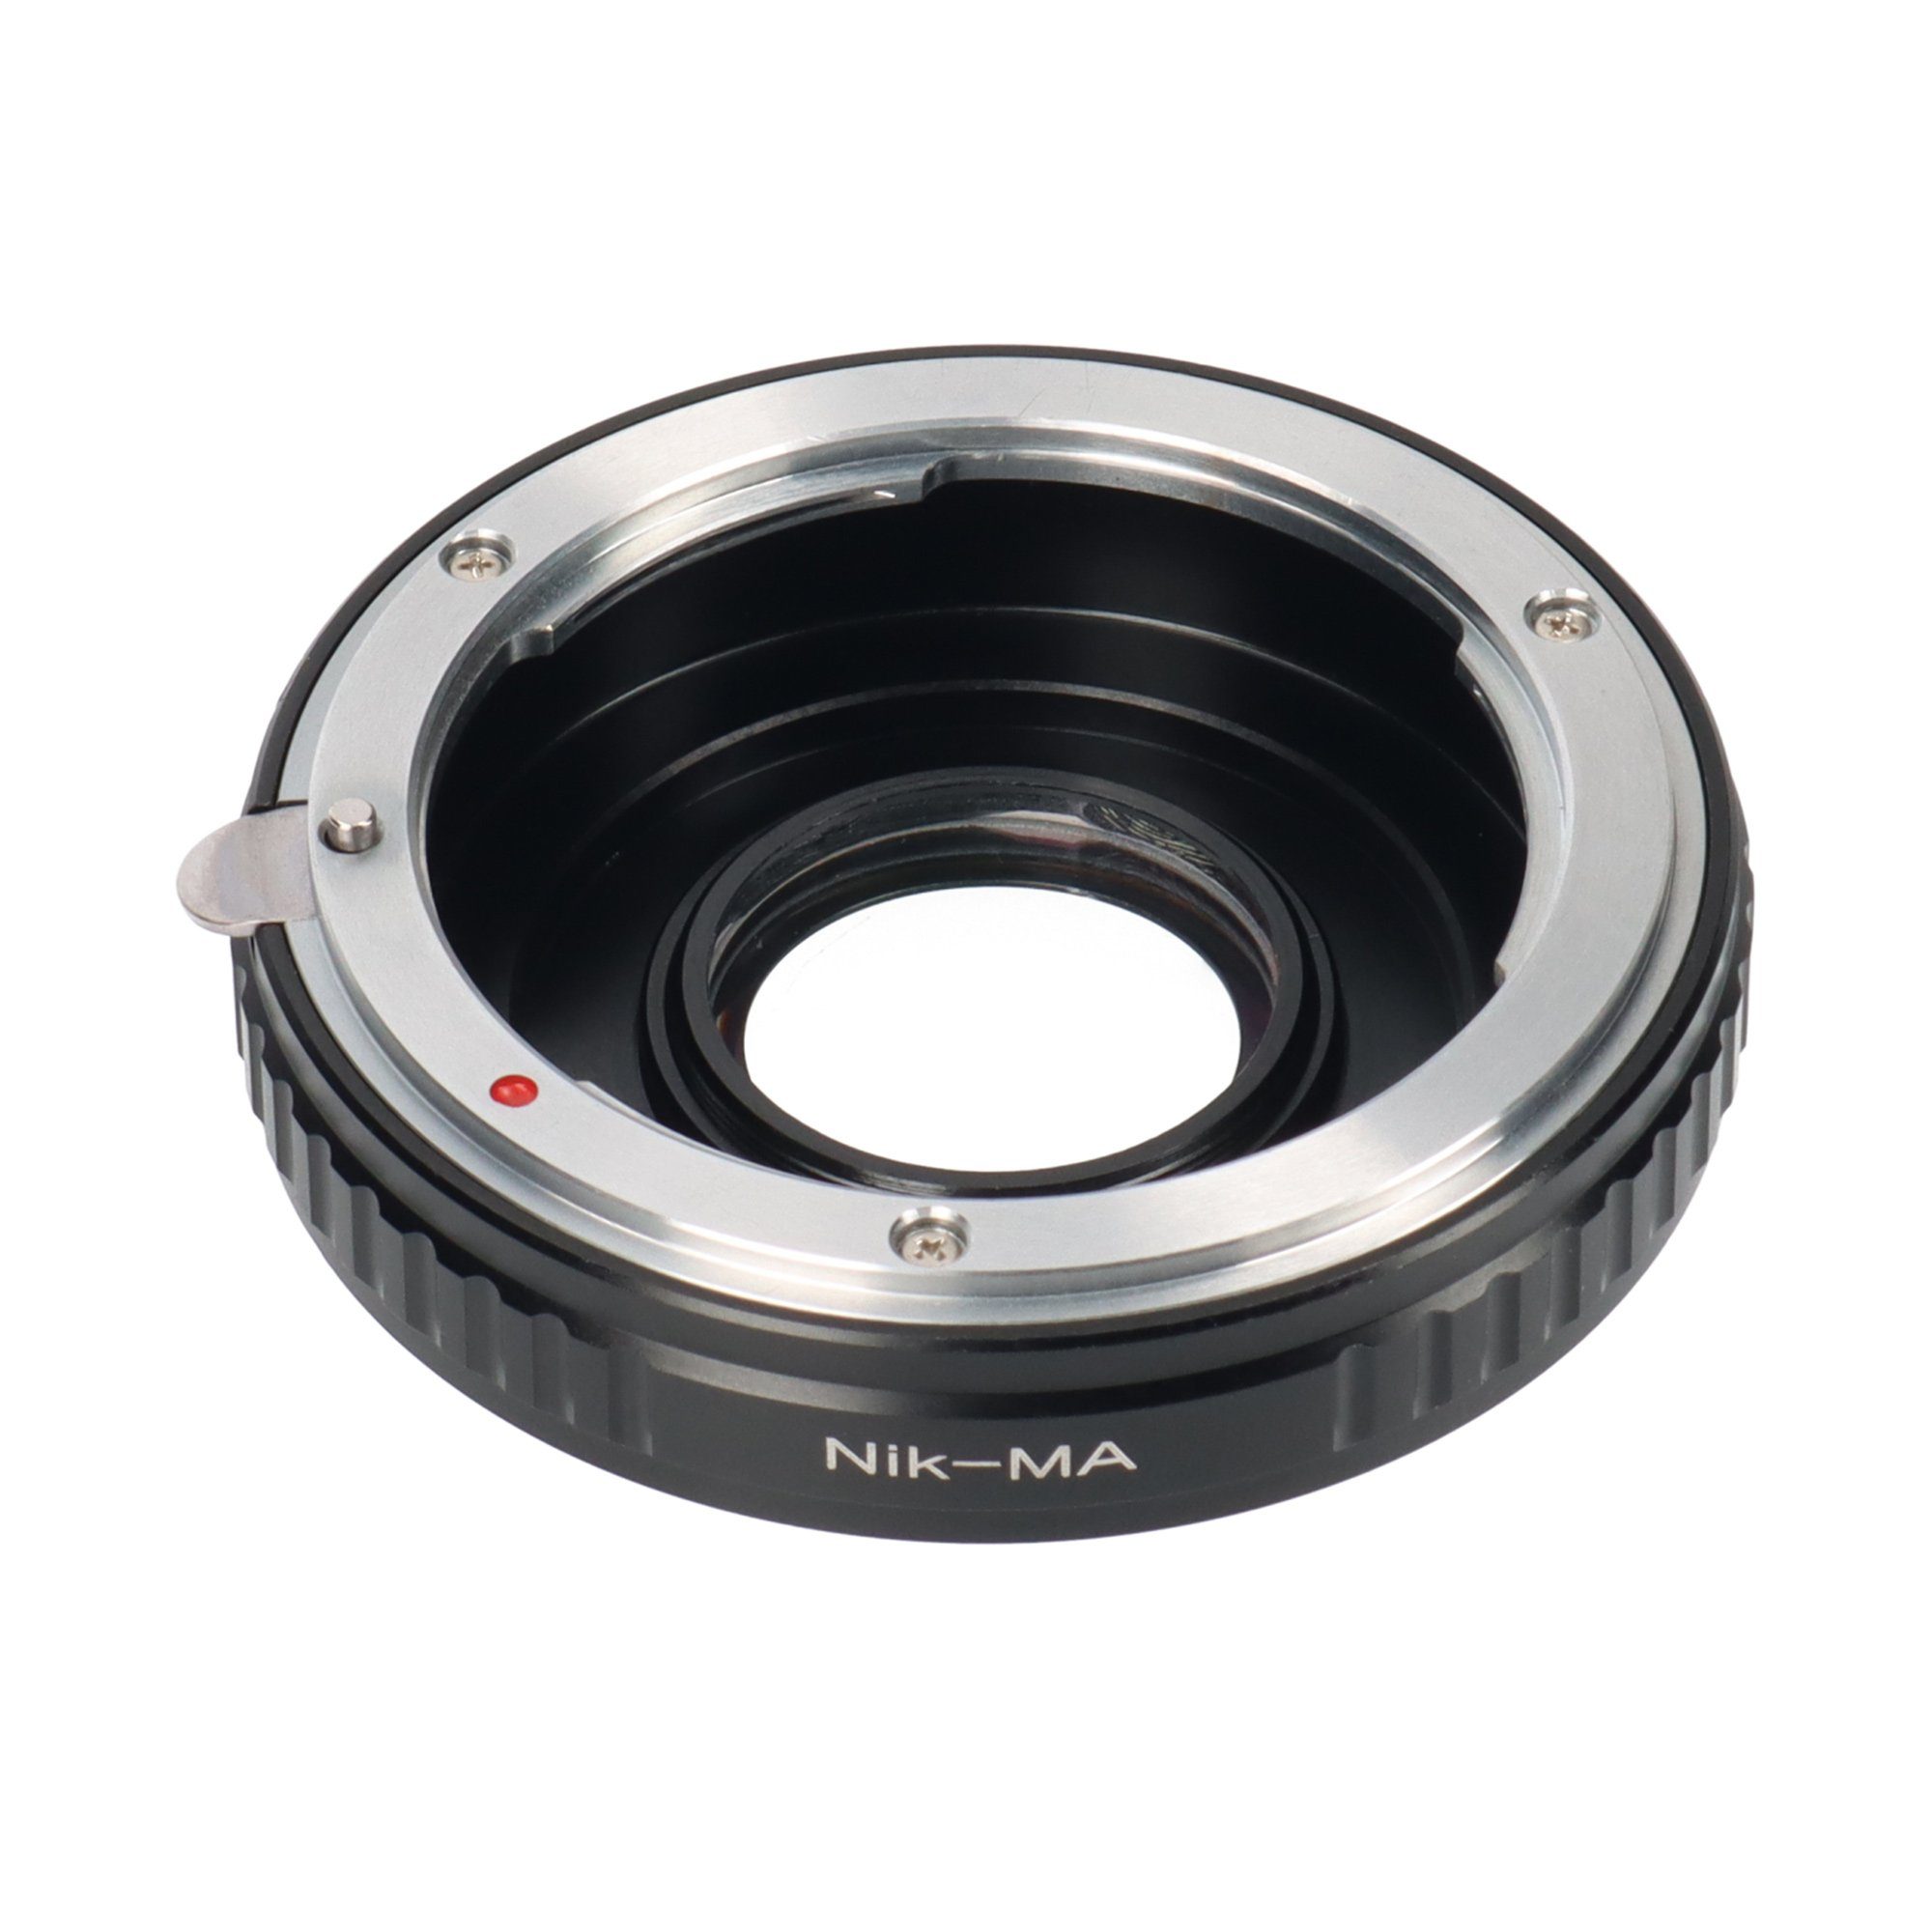 Adapter Korrekturlinse Objektiveadapter Sony F-Objektive ayex Nikon Alpha - +